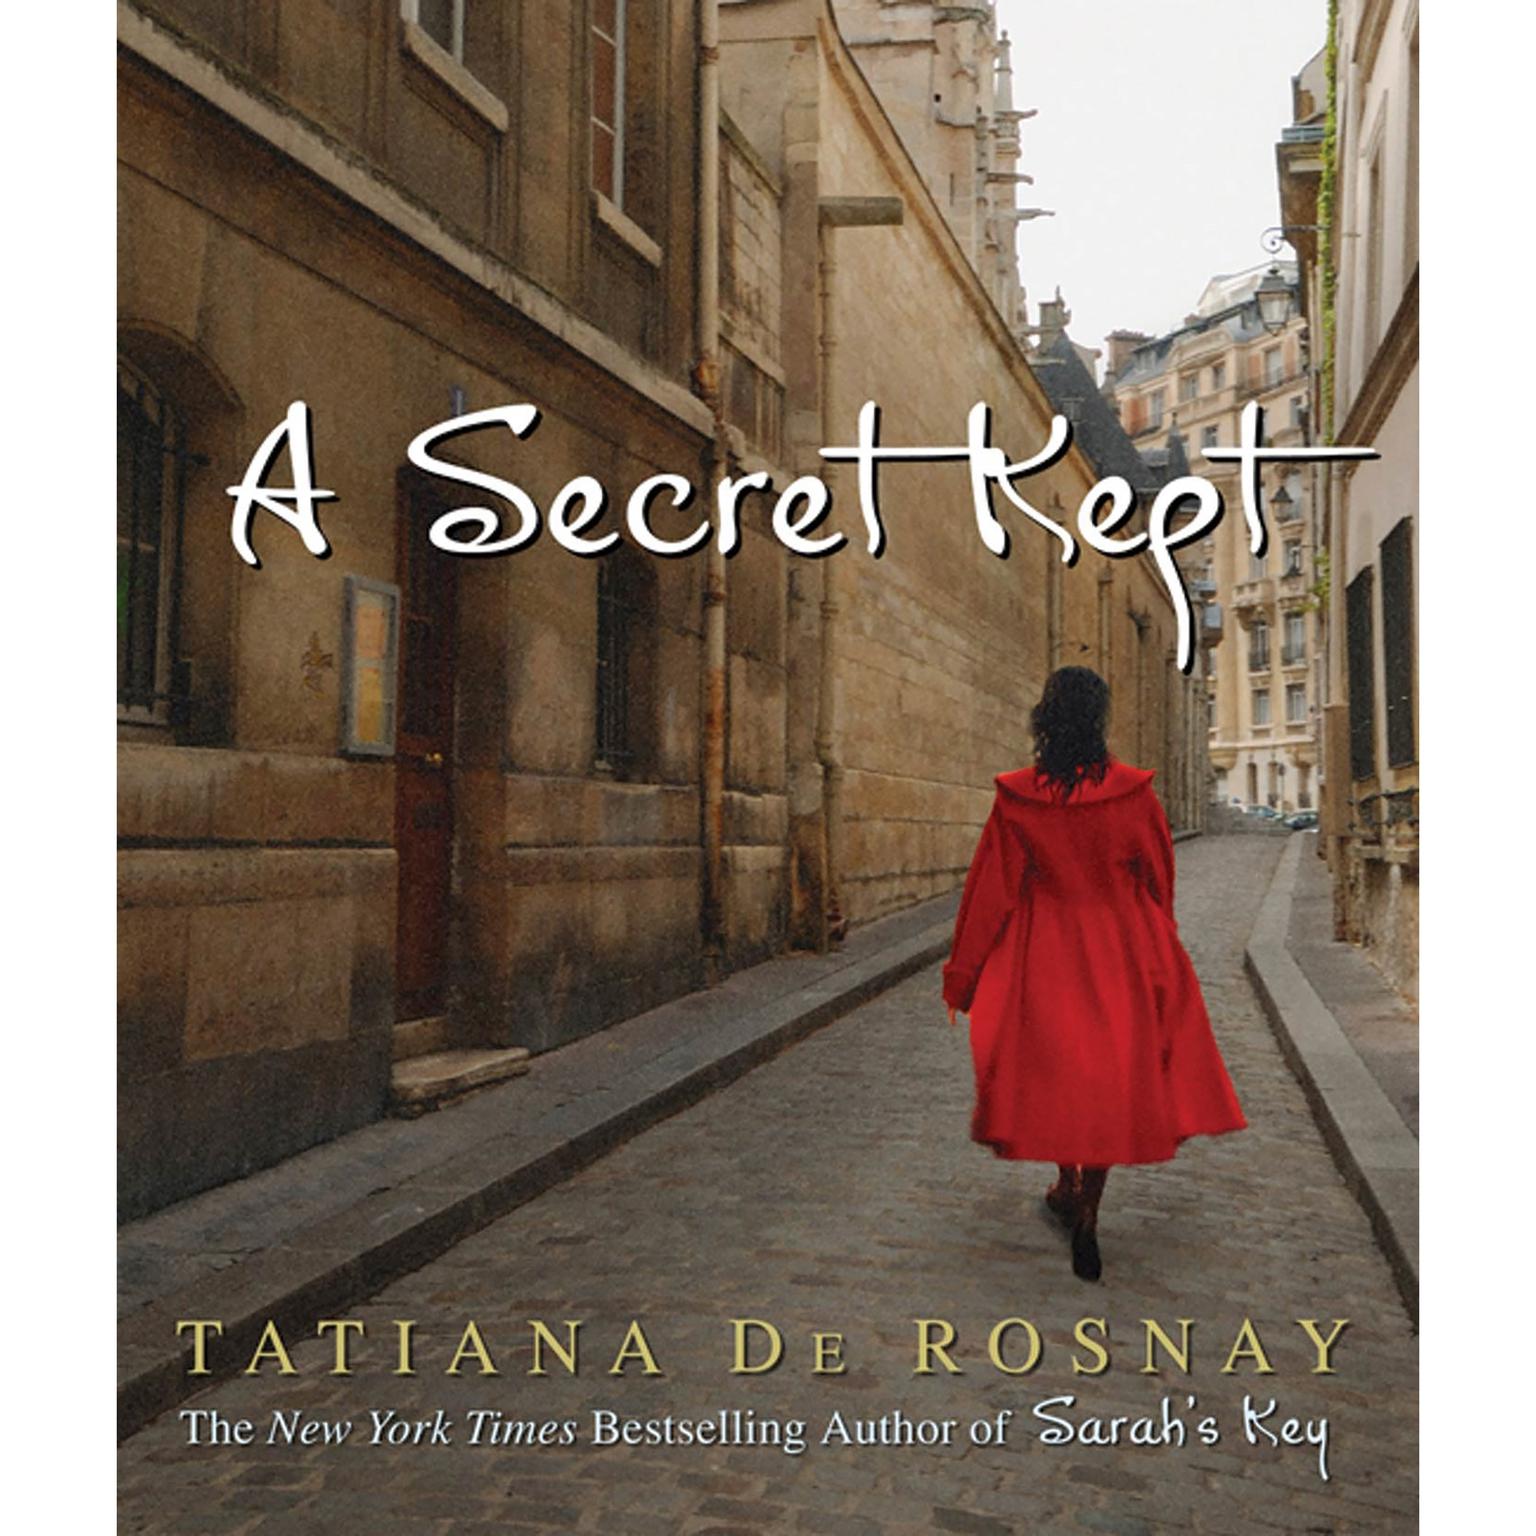 A Secret Kept: A Novel Audiobook, by Tatiana de Rosnay